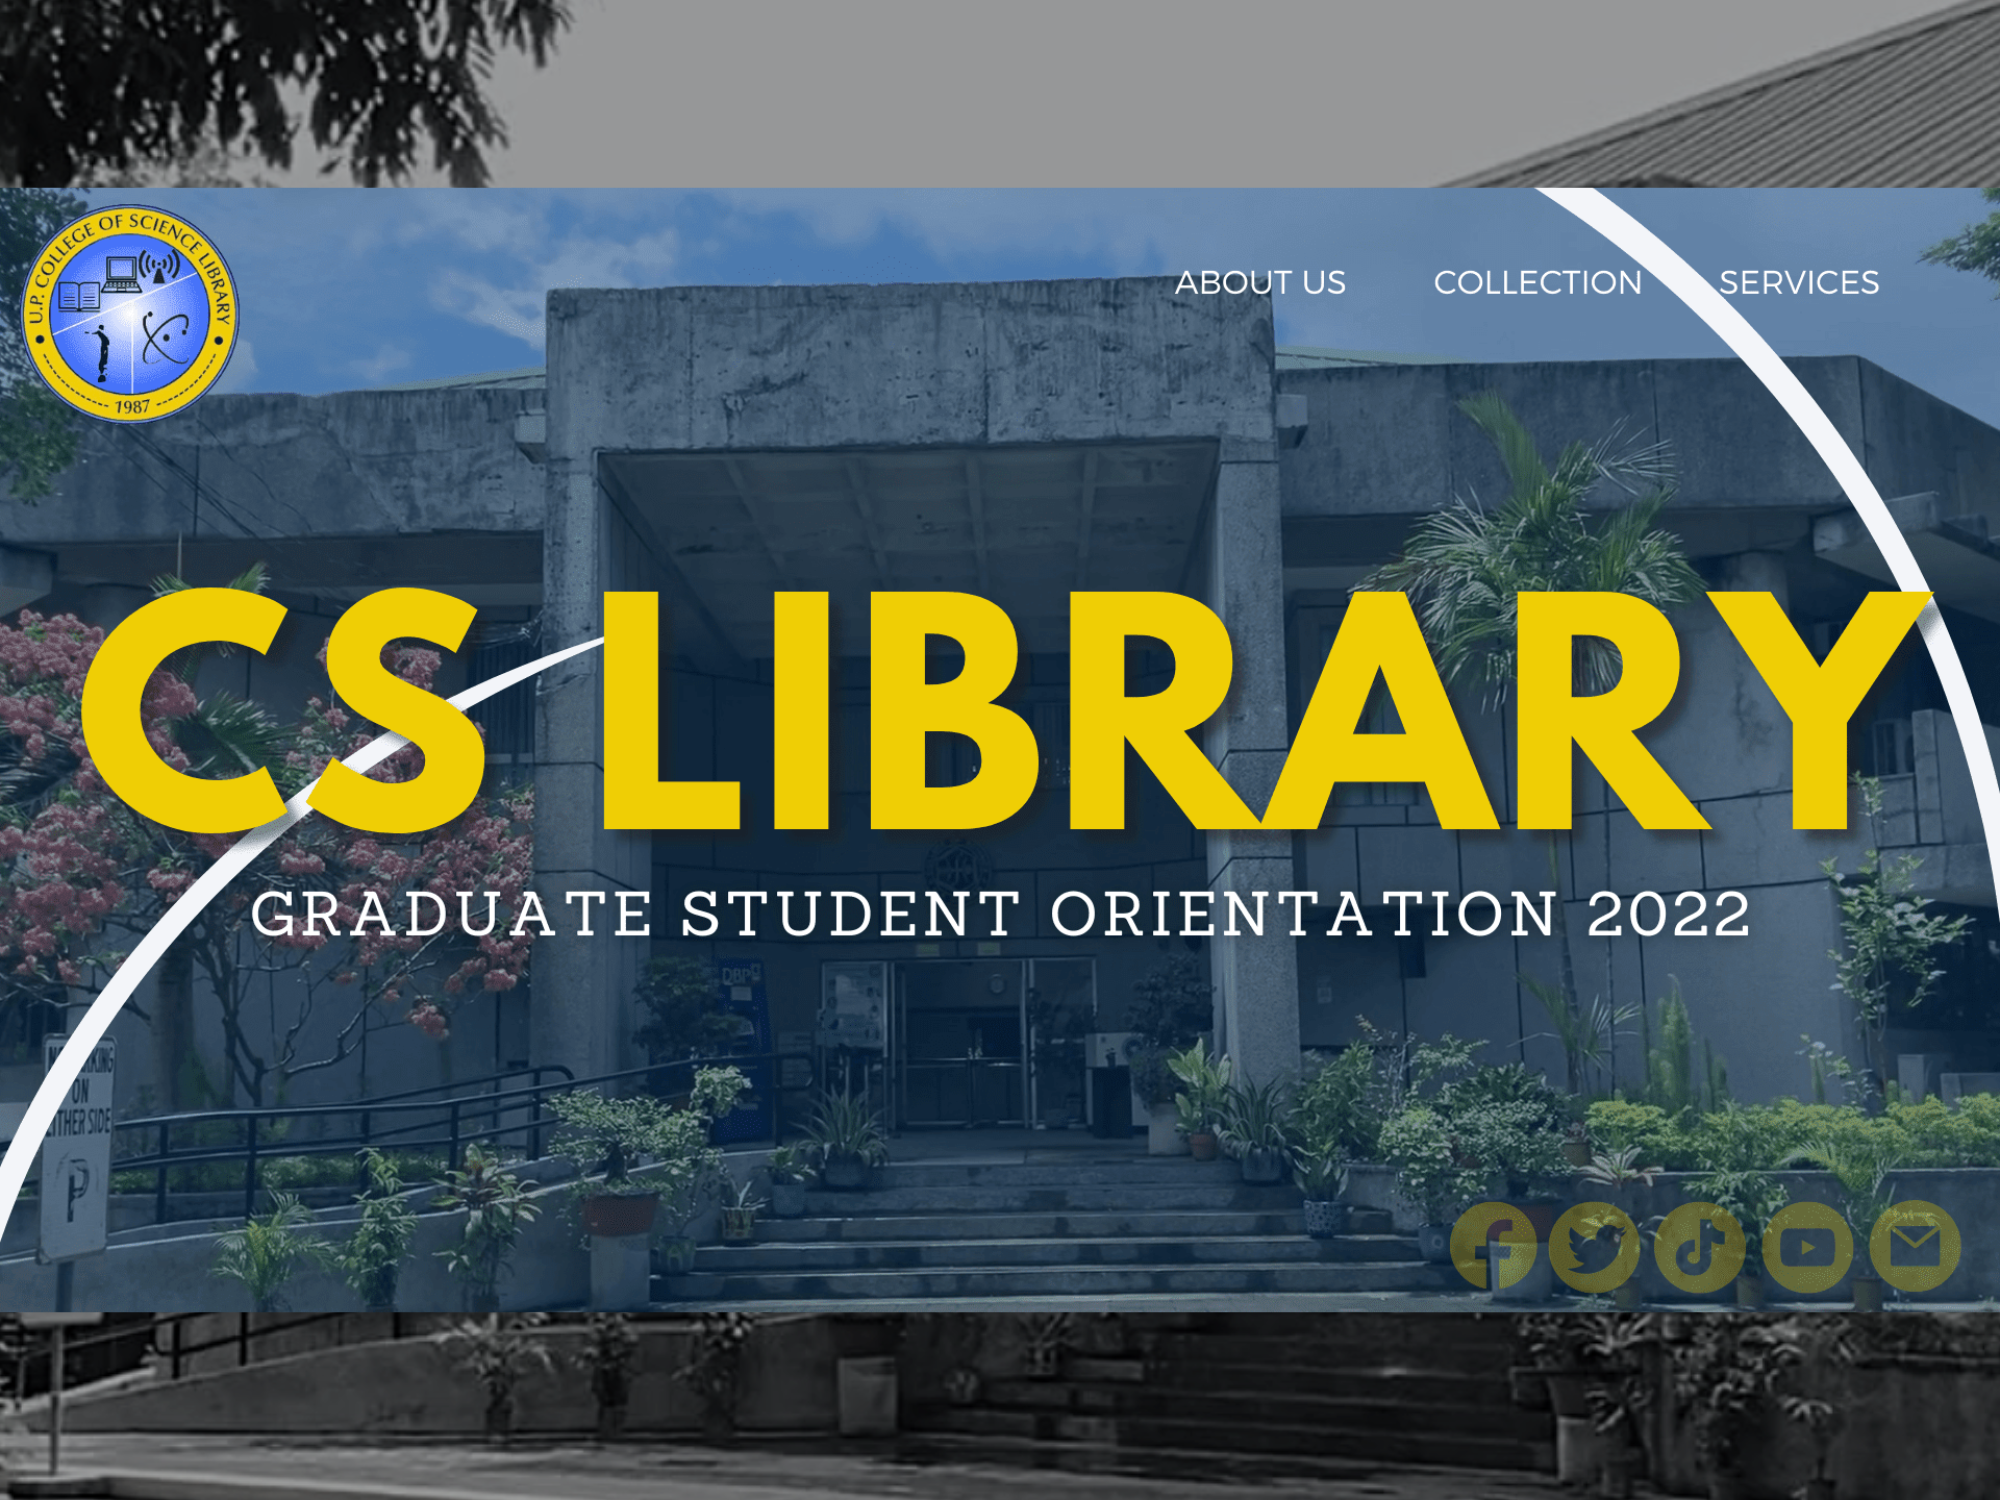 Graduate Student Library Orientation 2022